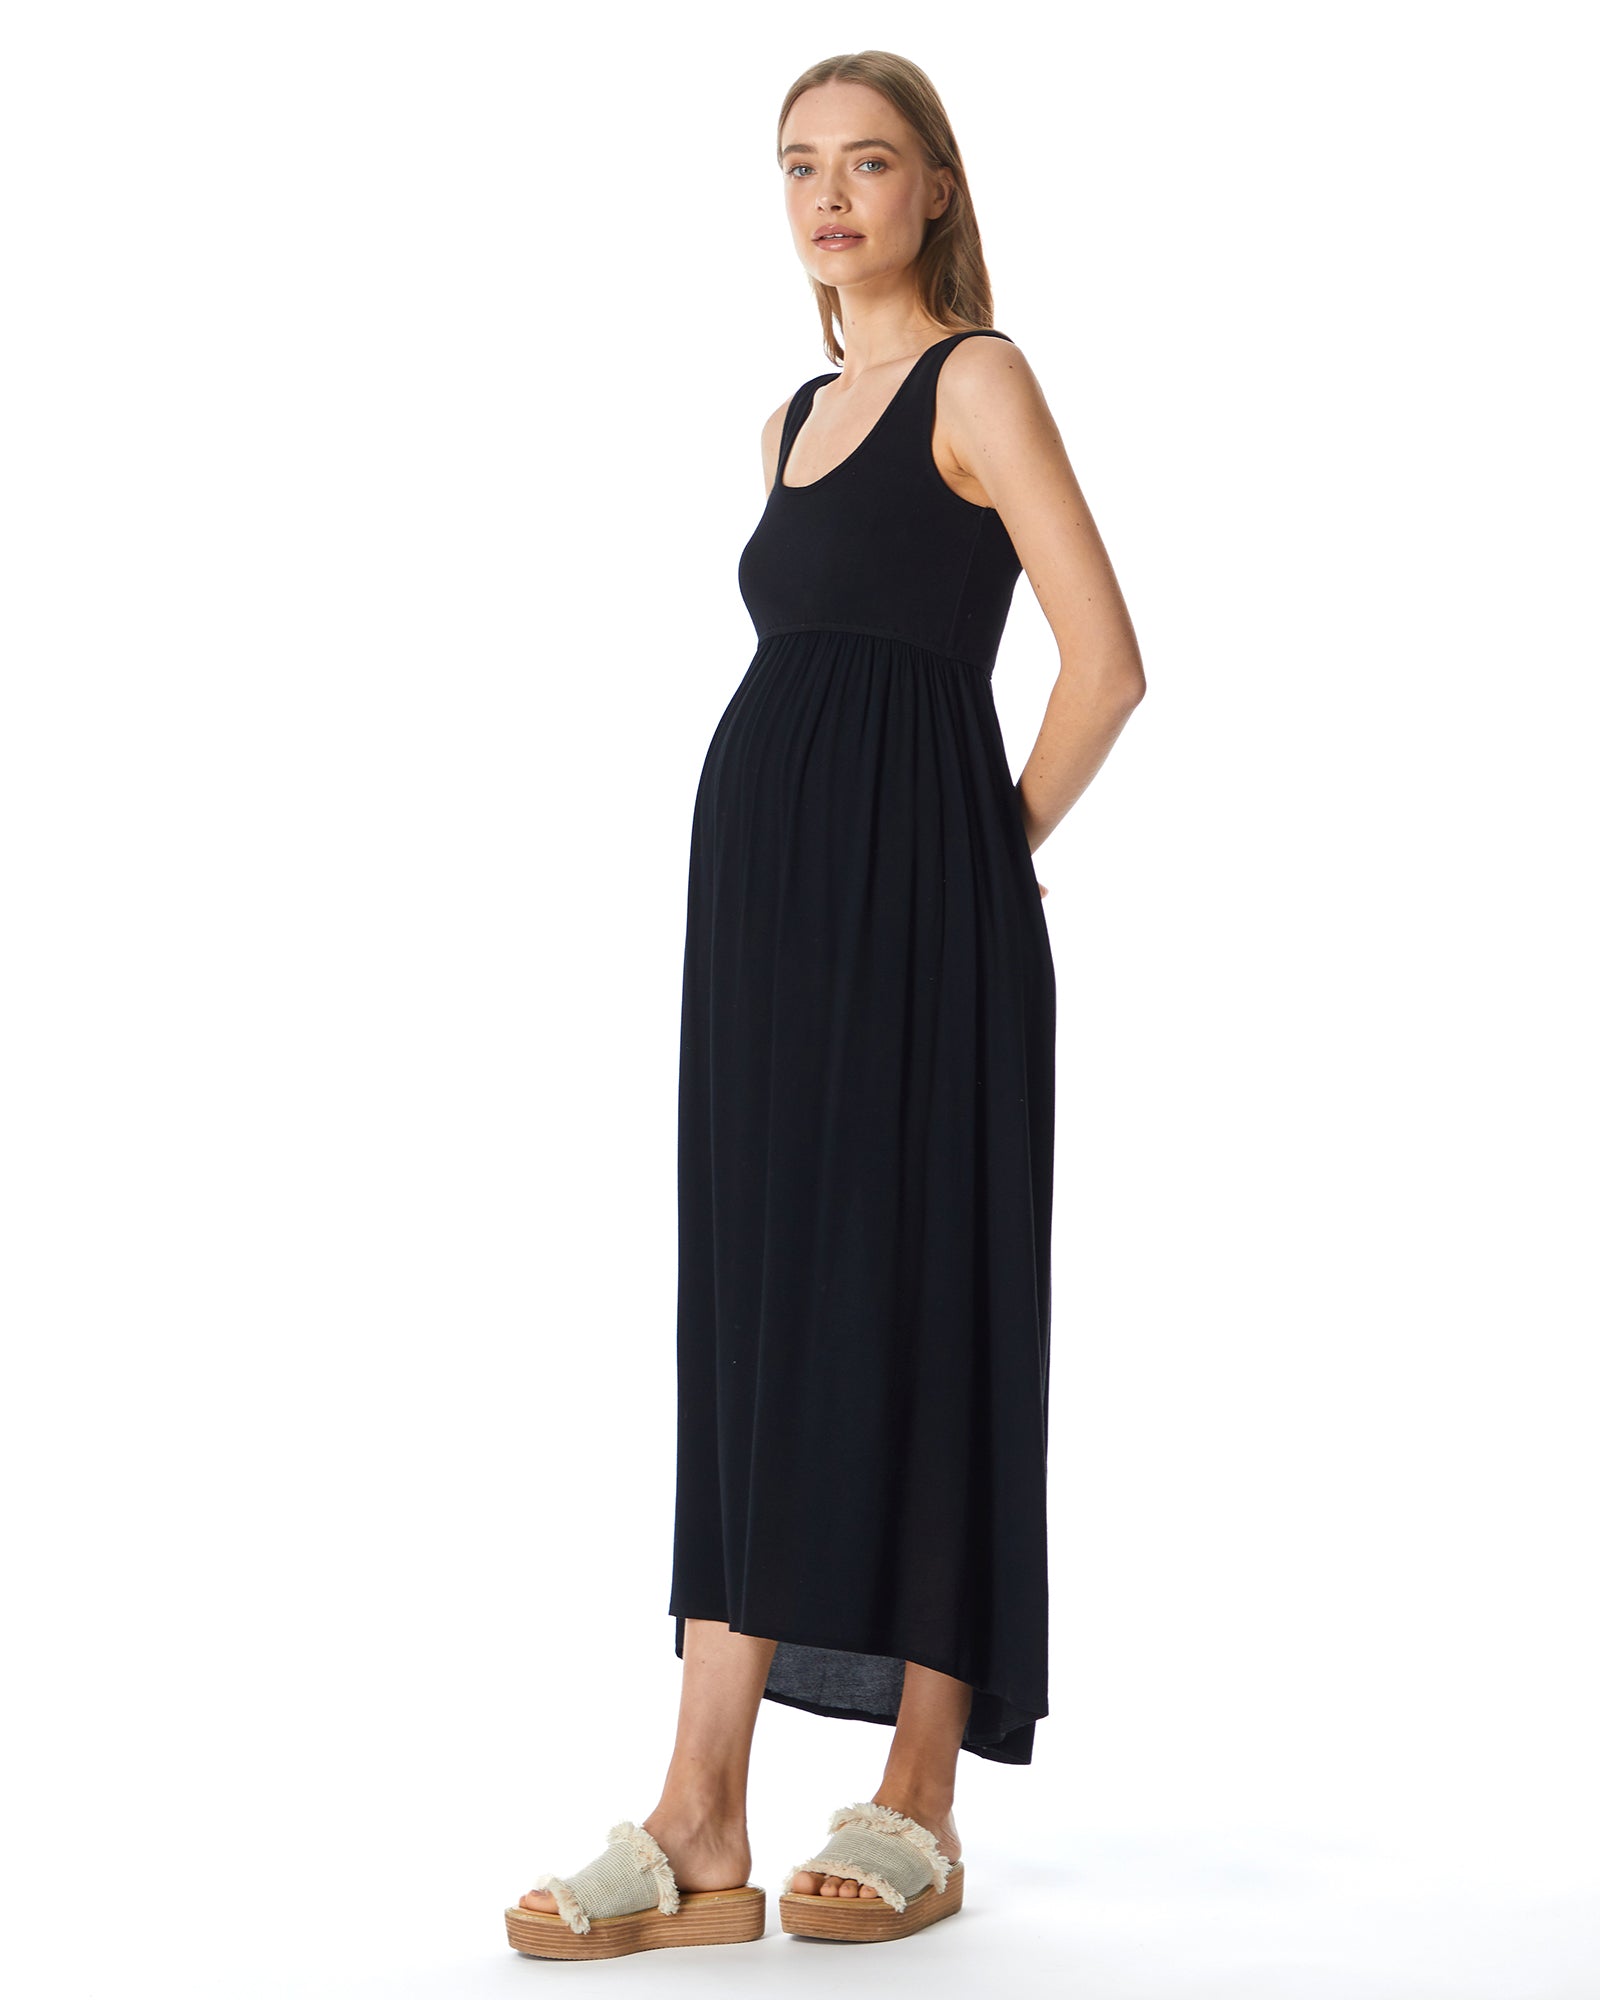 Pregnancy Maxi Dress Women Maternity Photography Summer Floral Pattern  Skirt | eBay